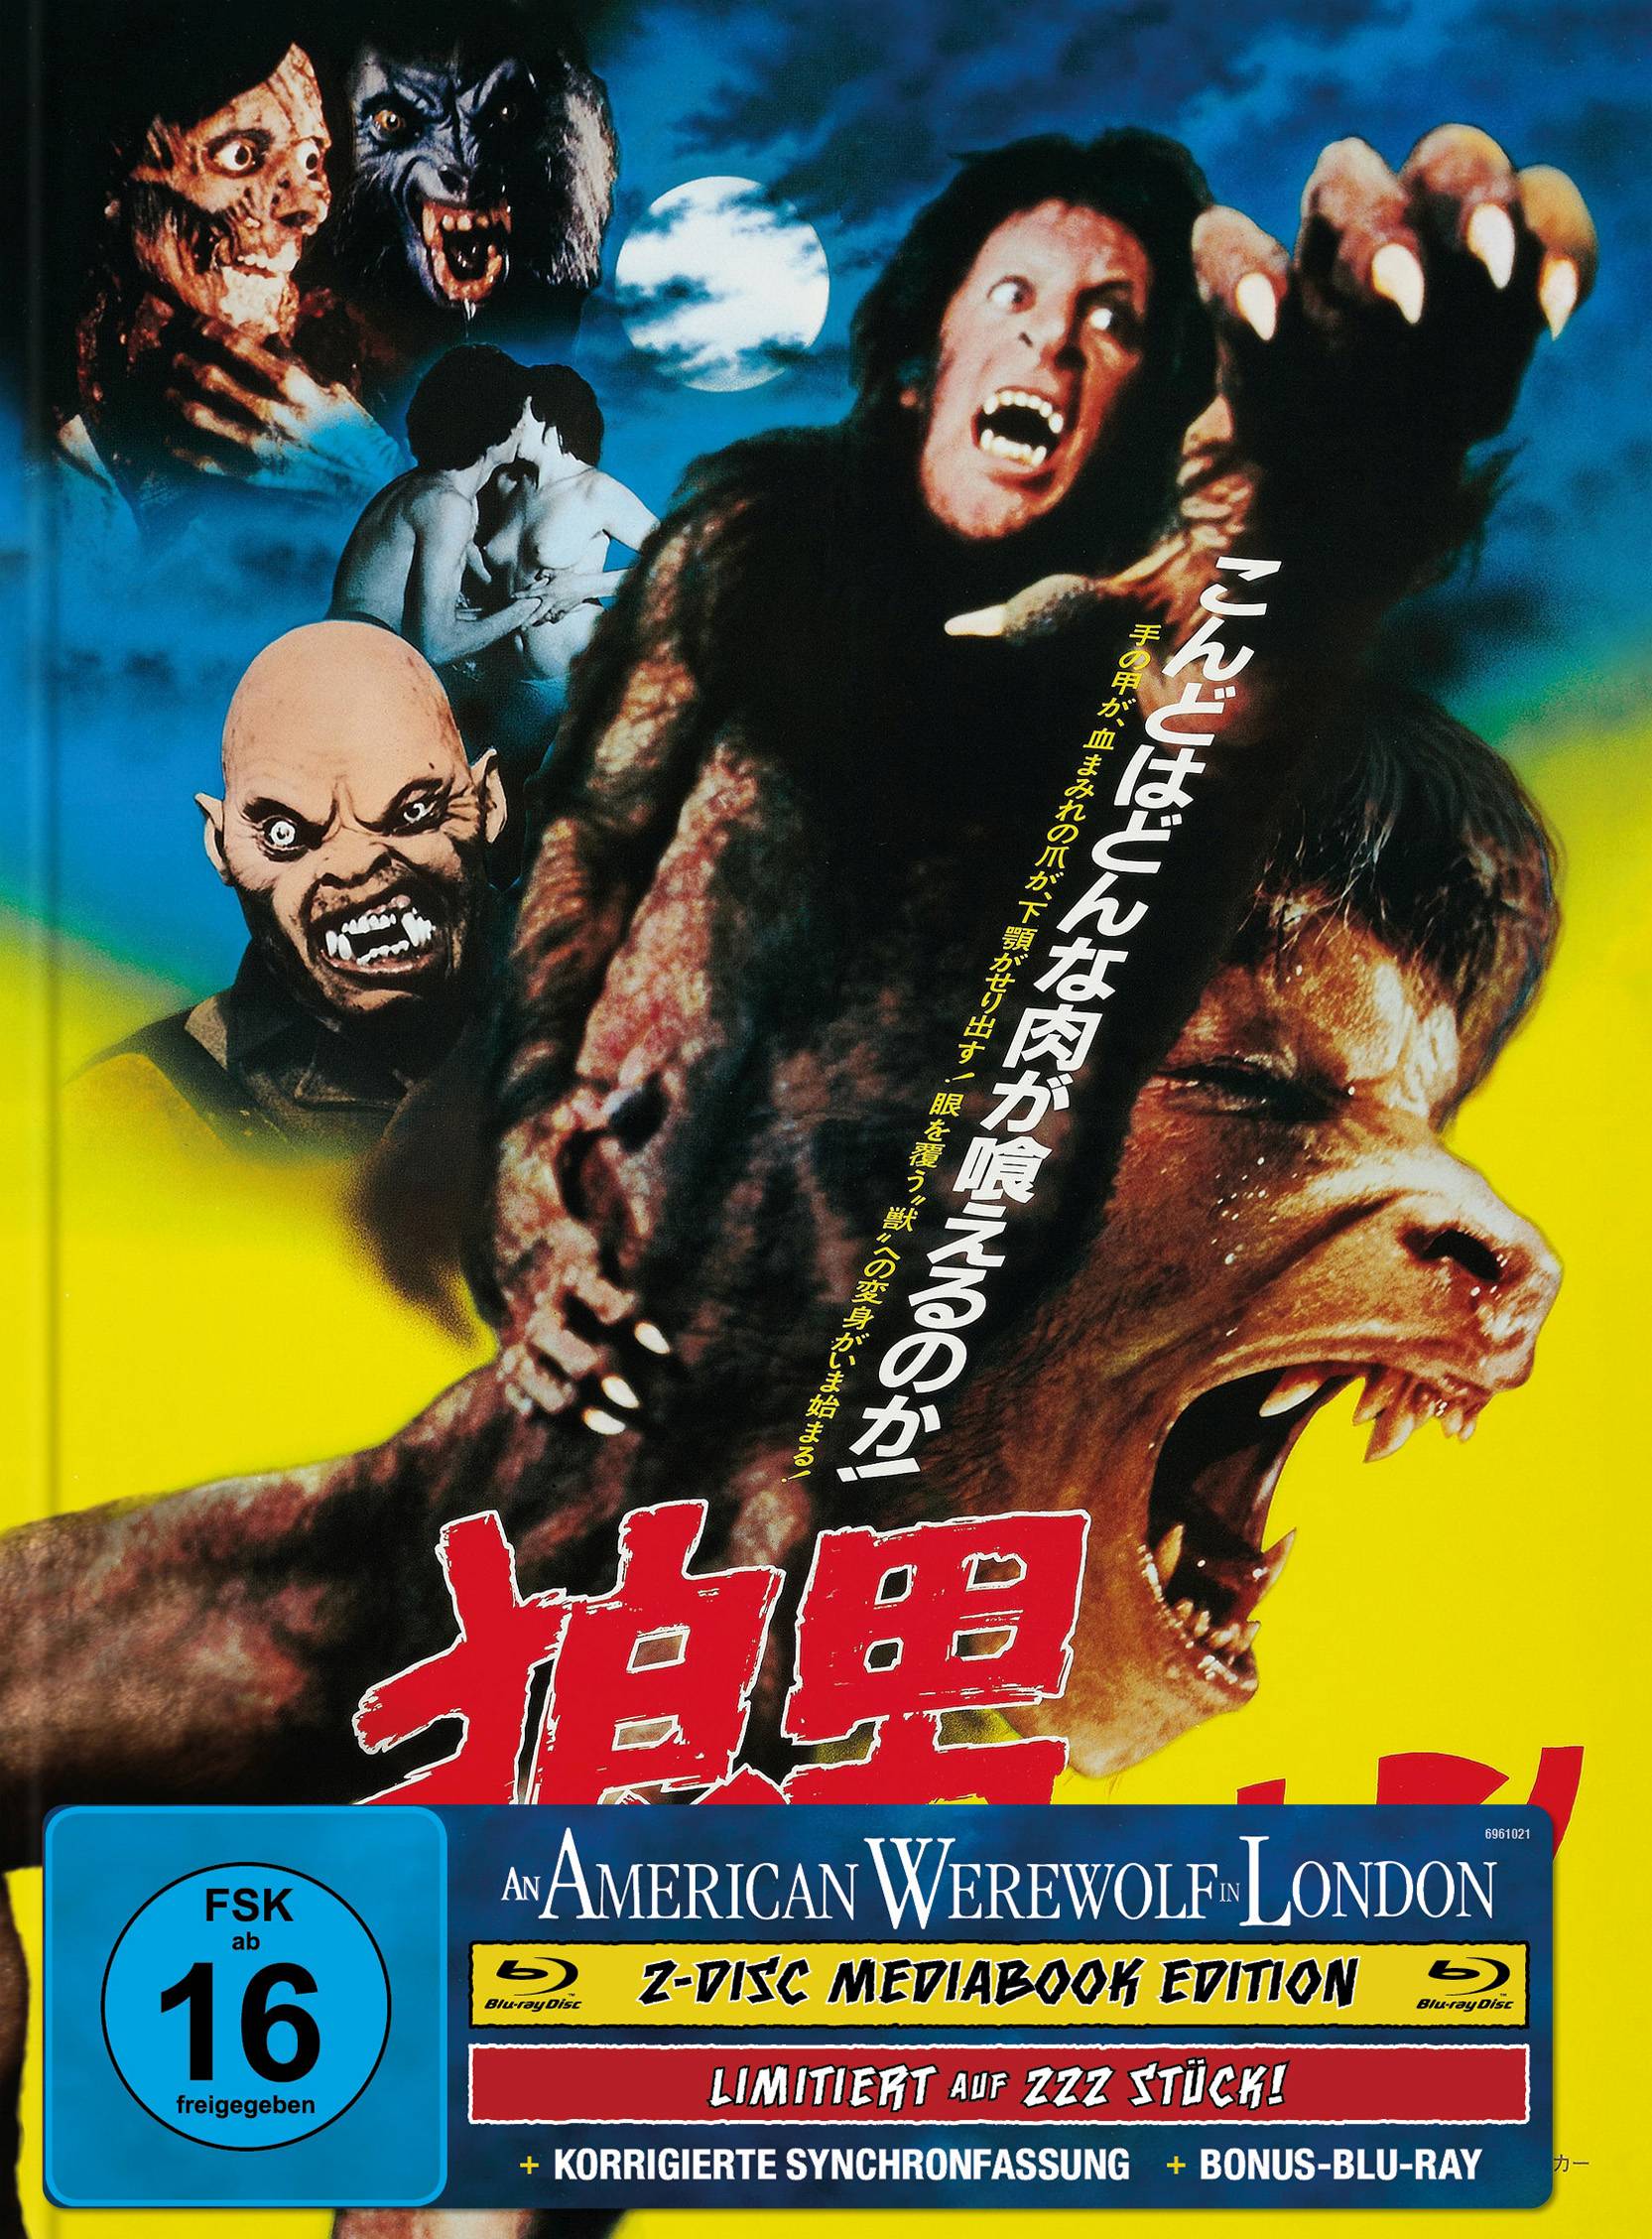 AN AMERICAN WEREWOLF IN LONDON 2-Disc-Mediabook (Blu-ray + Bonus-Blu-ray) (JAP-Artwork) - 222 Stk.